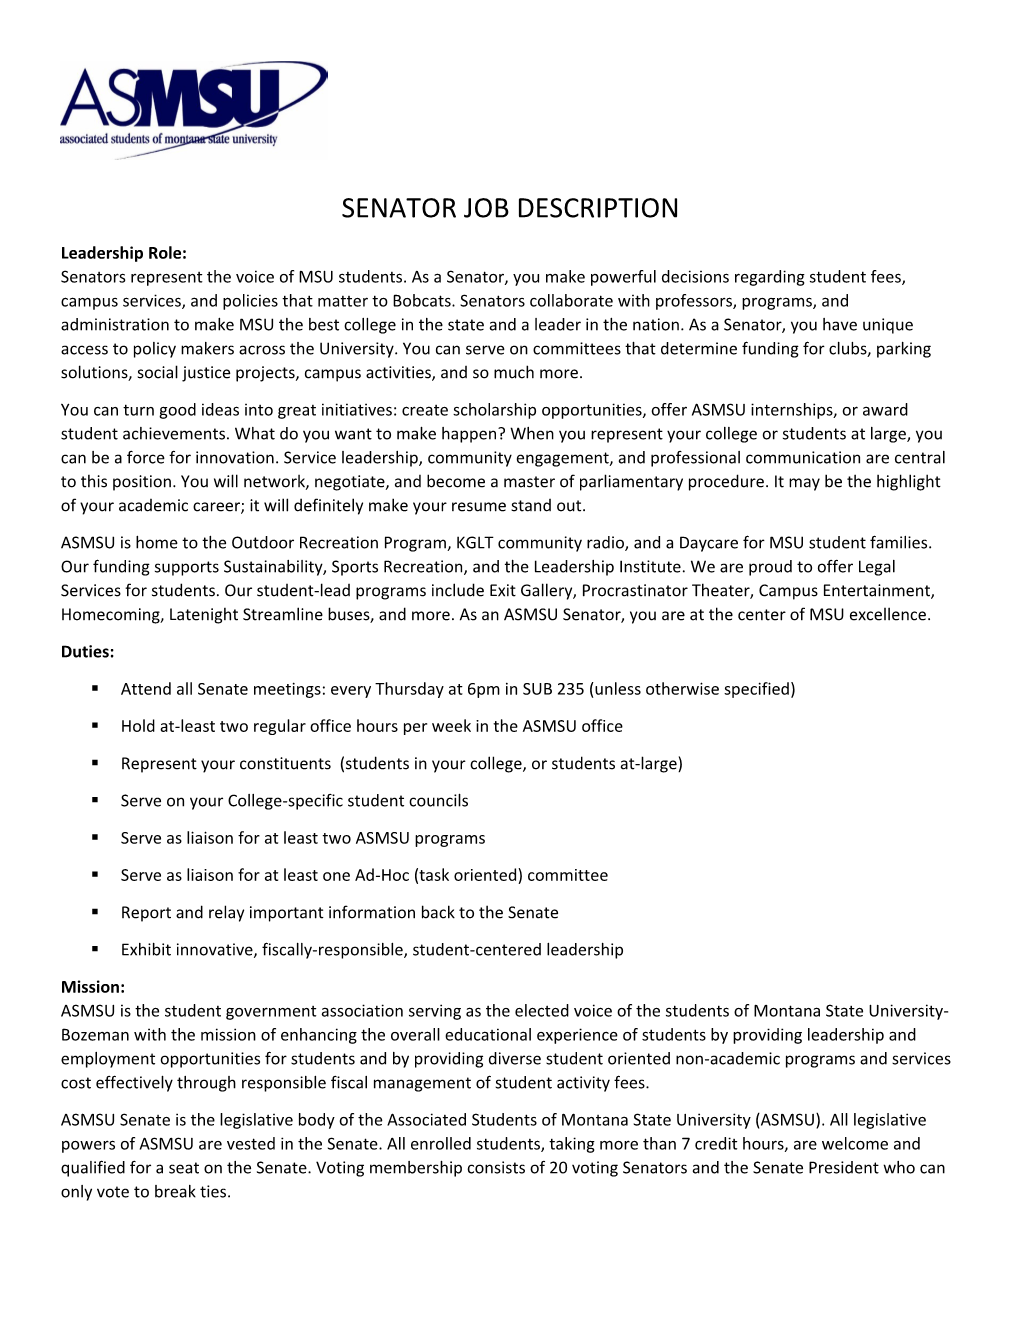 Senator Job Description